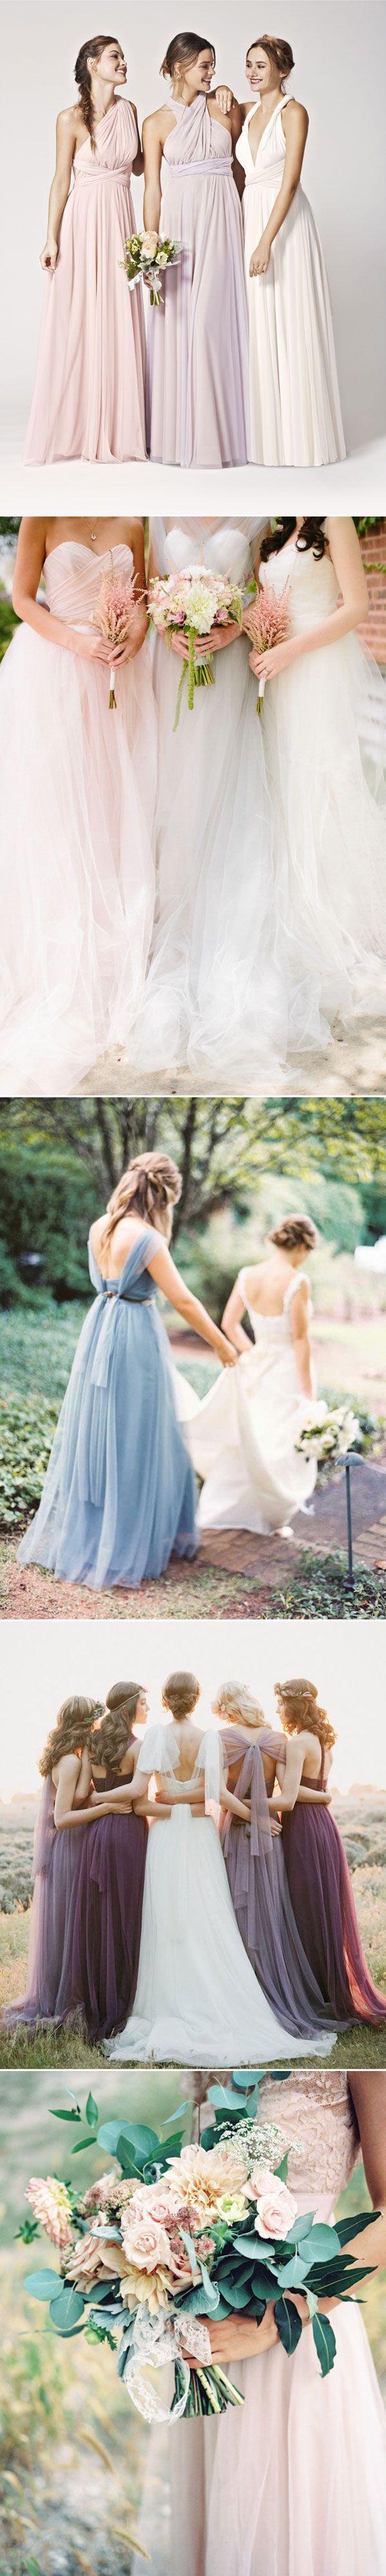 زفاف - Top 6 Bridesmaid Dress Trends For Fall Wedding 2015